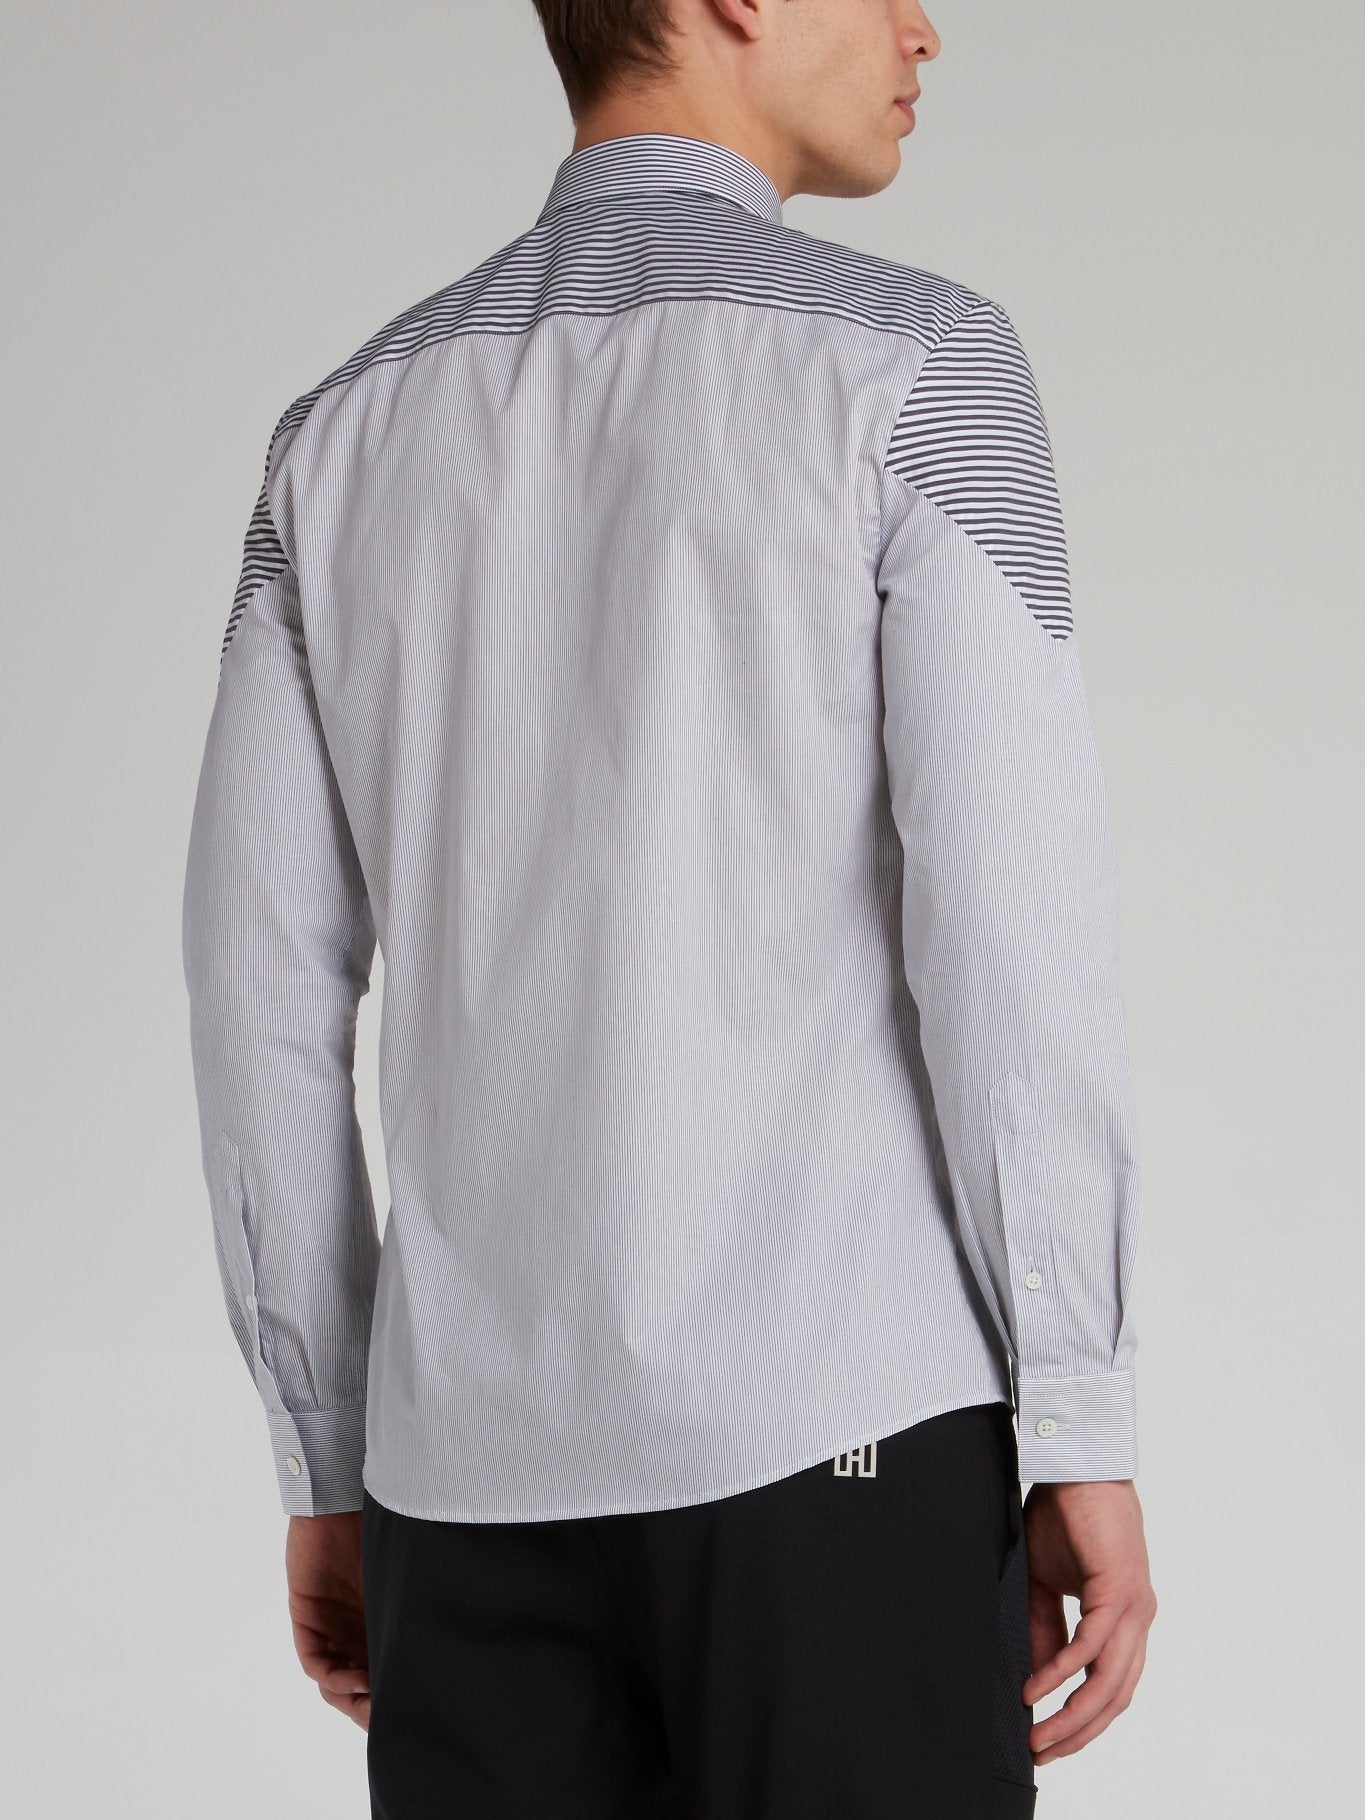 Grey Multi-Stripe Button Up Shirt